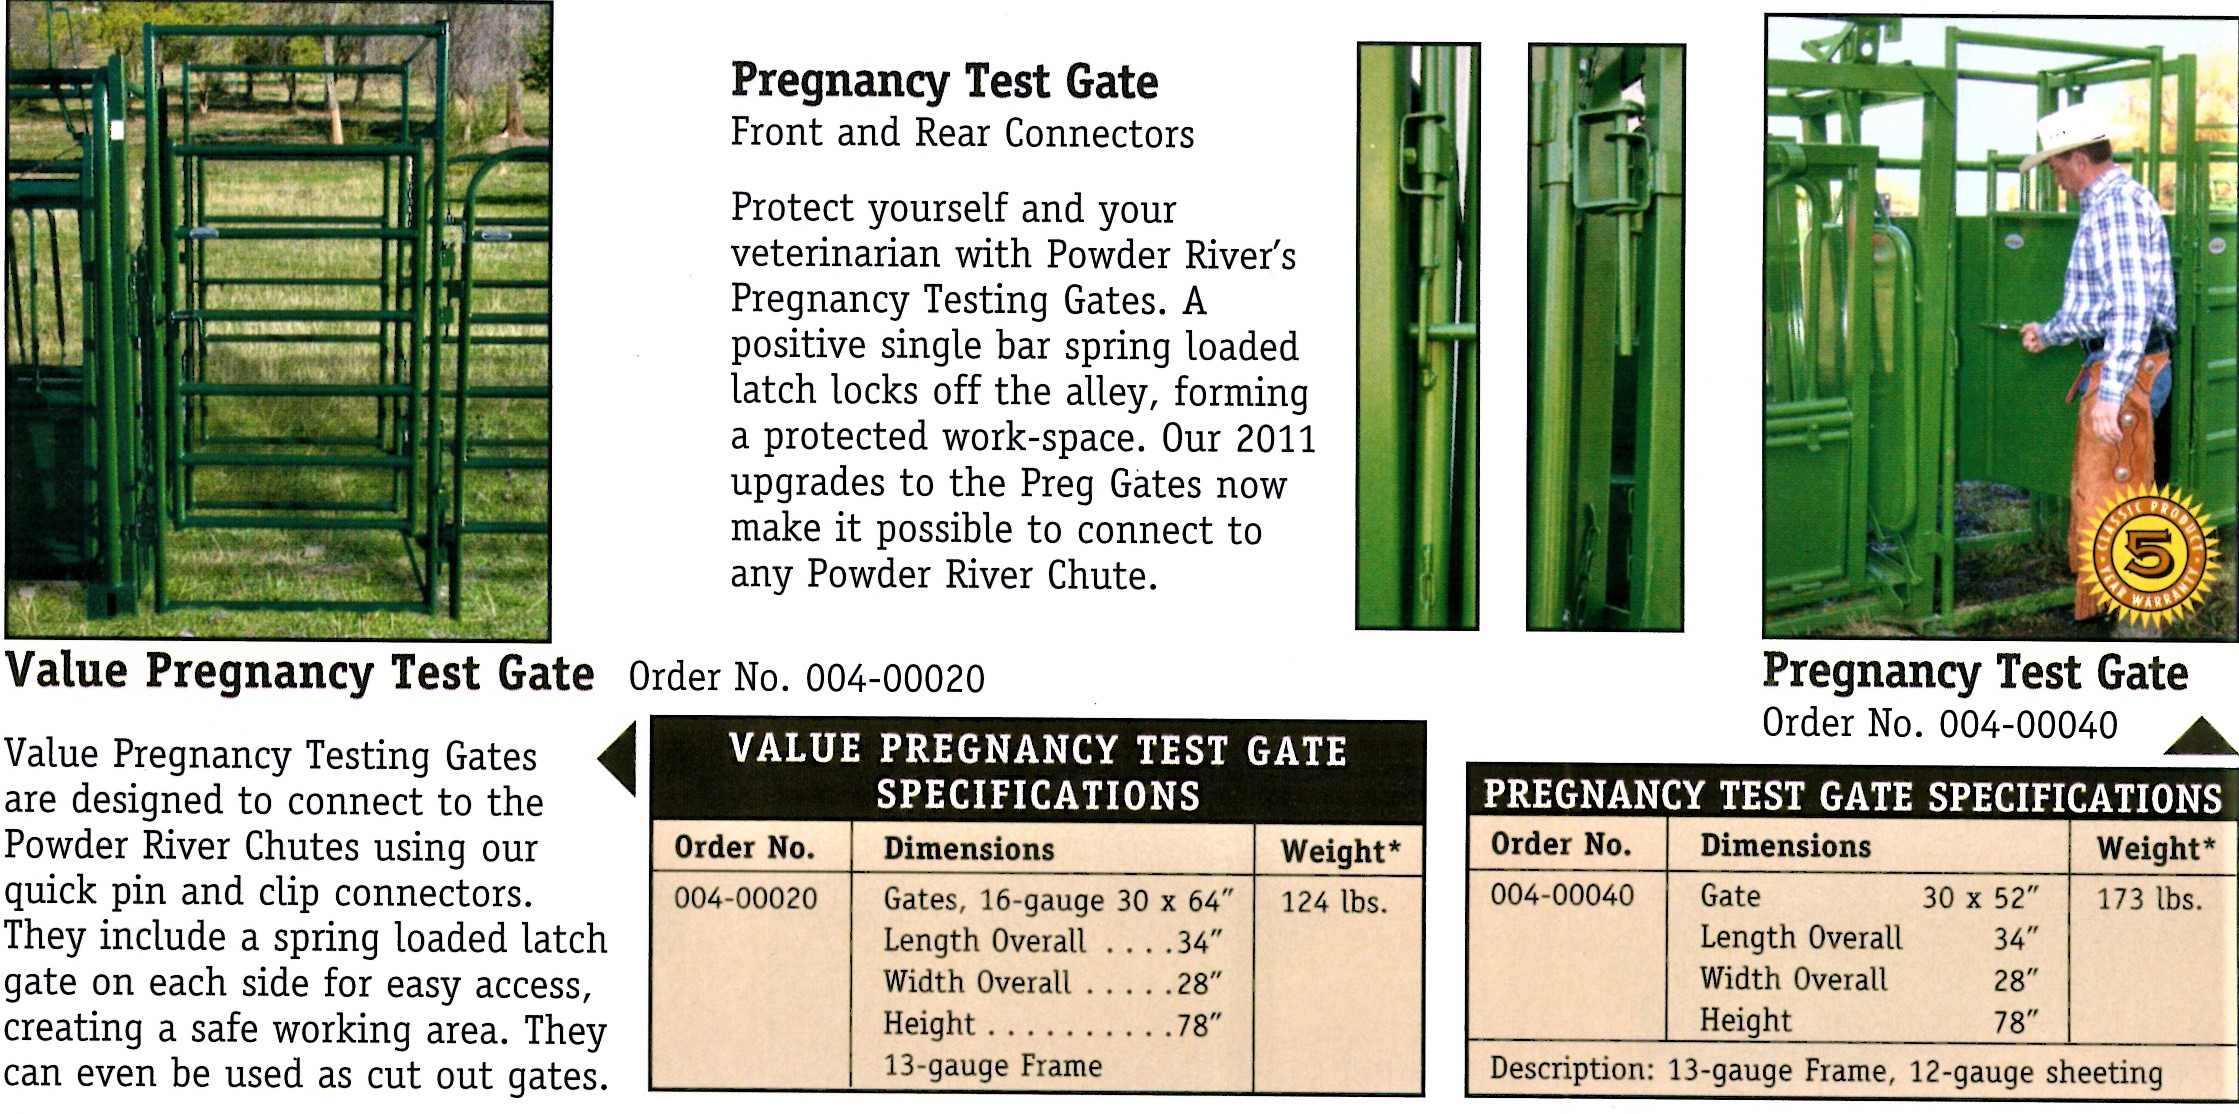 august-2020-powder-river-pregnancy-test-gate-173-lbs.-004-00040.jpg